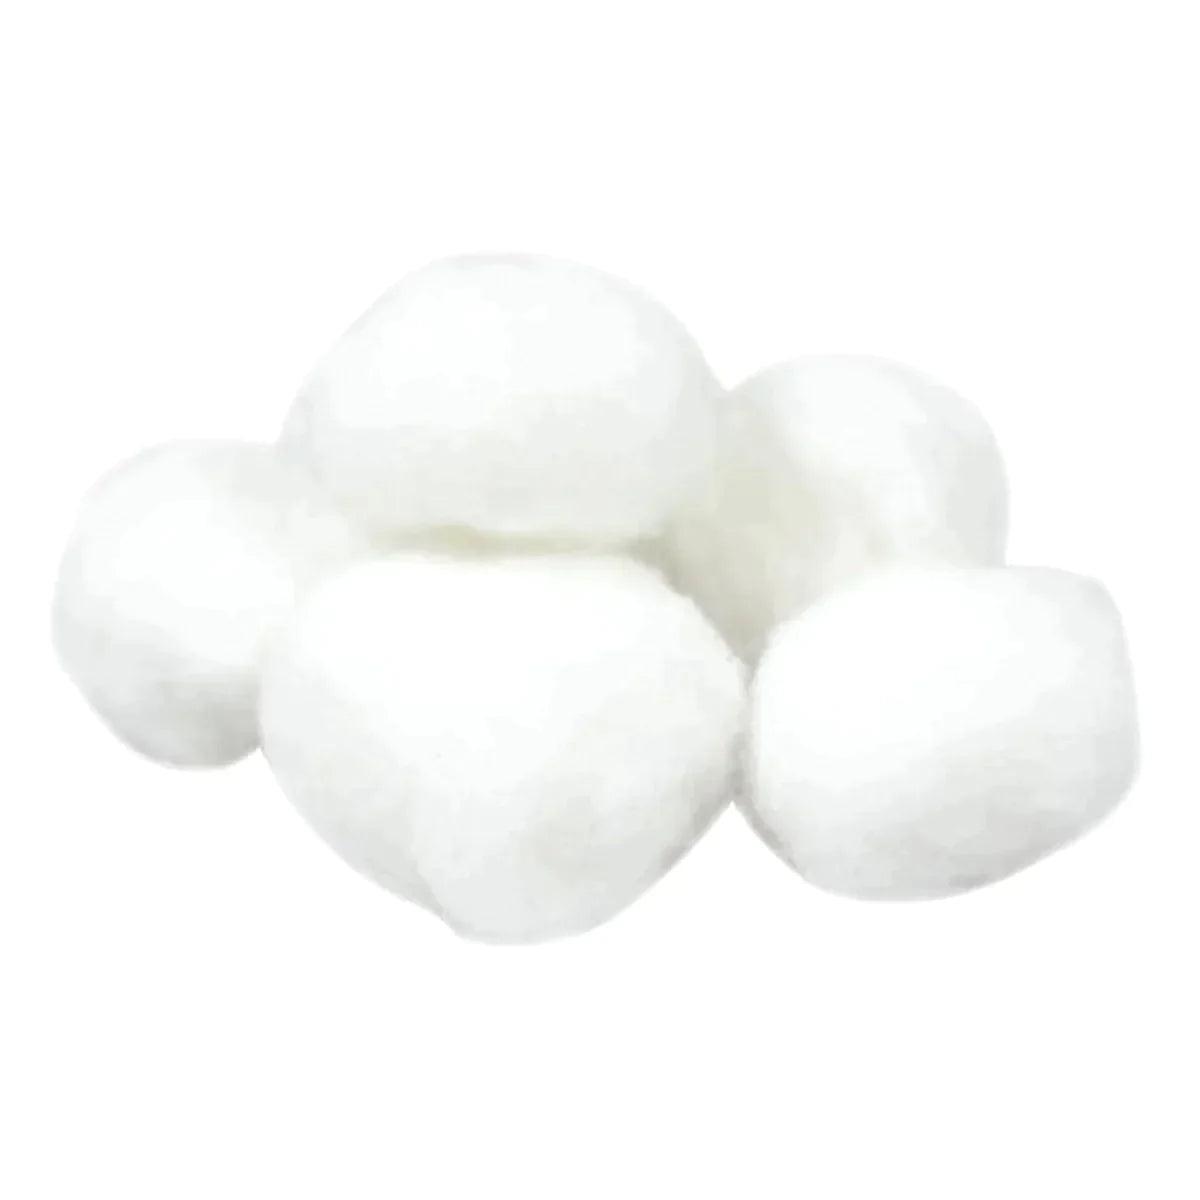 Medline - Cotton Balls Medium (200 Count)